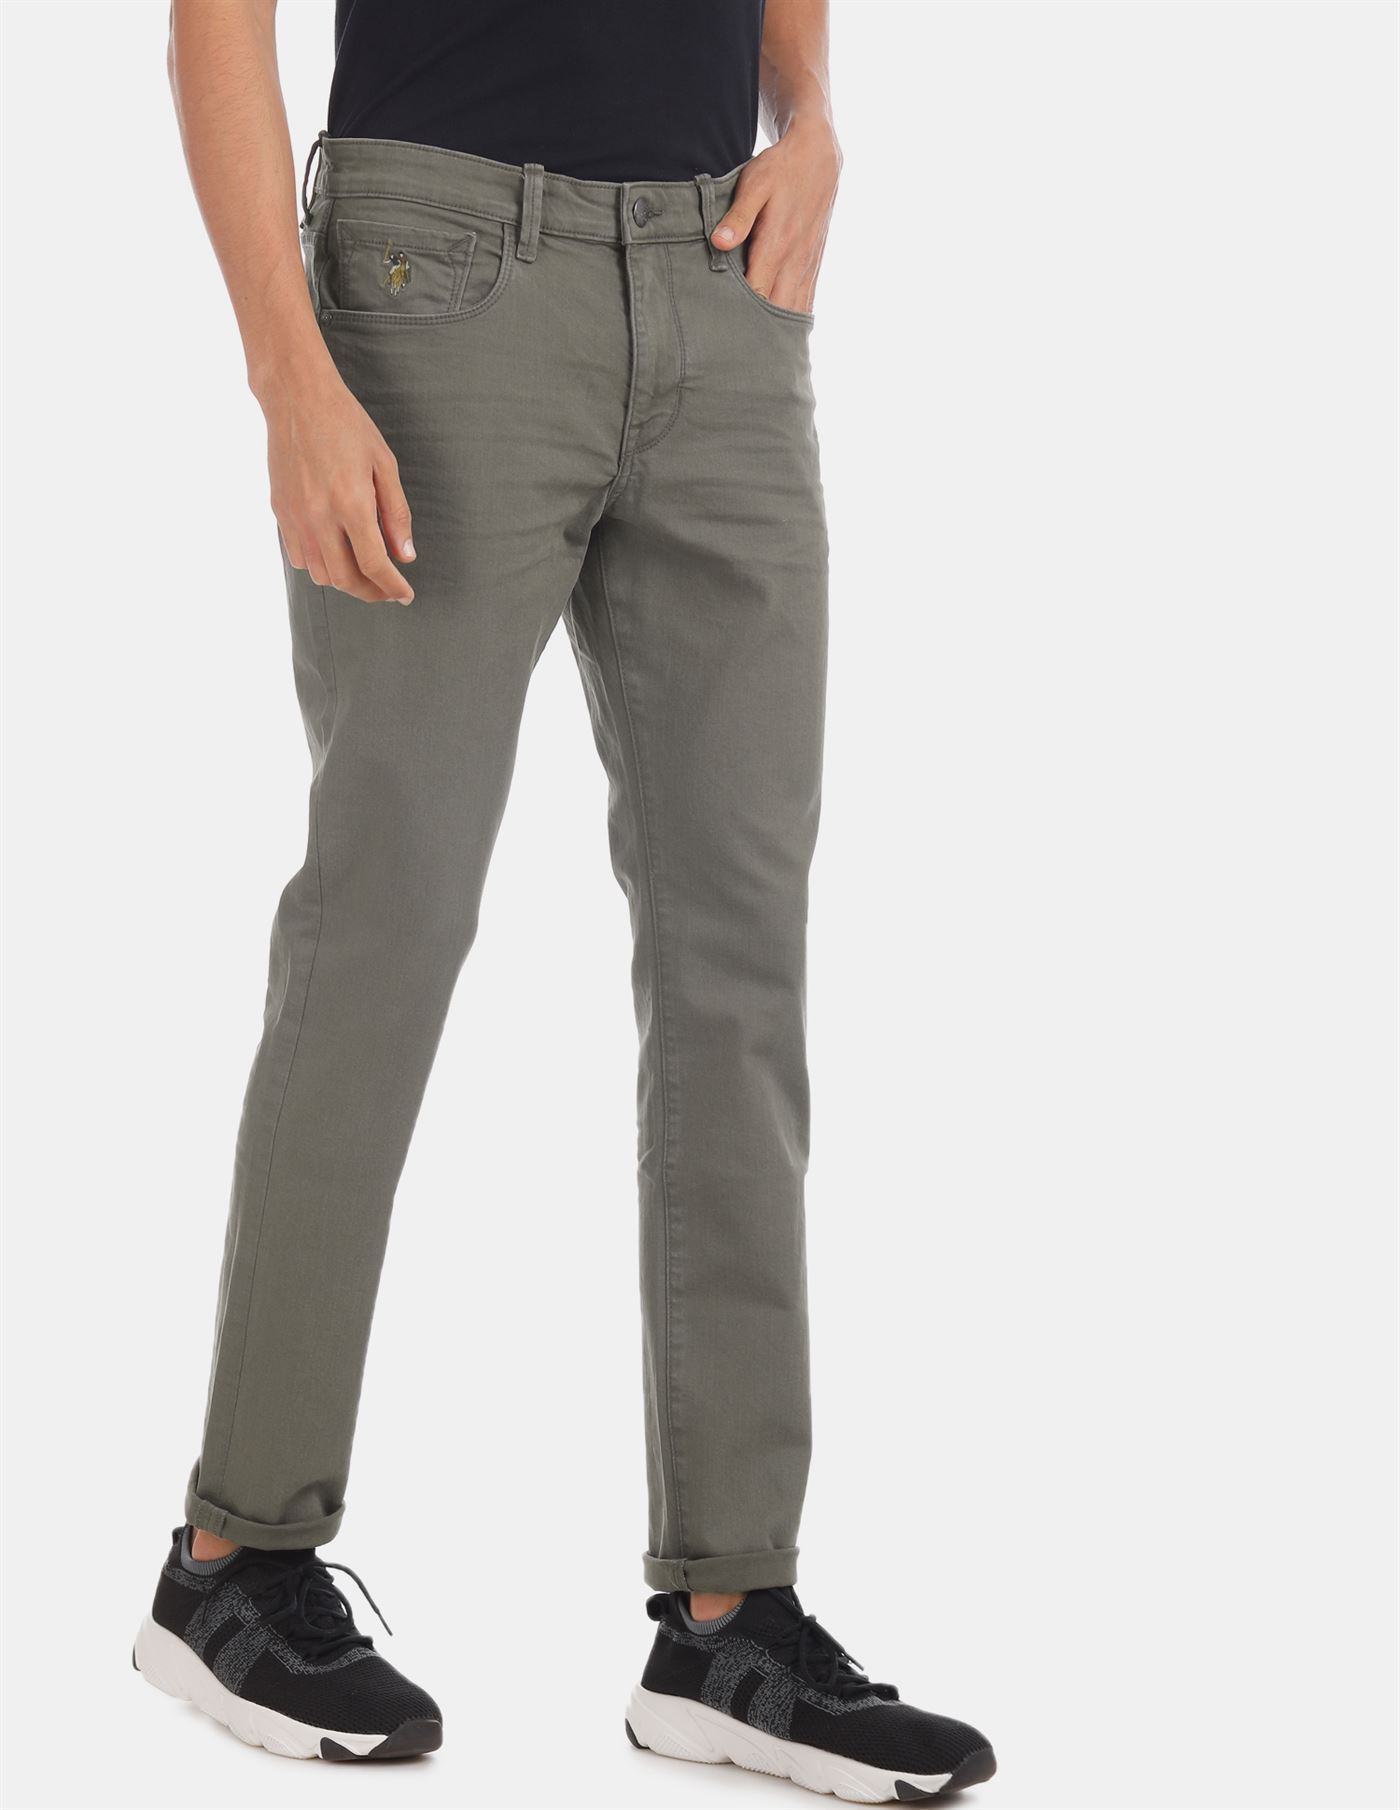 U.S. Polo Assn. Slim Fit Twill Cargo Pants, $50 | Amazon.com | Lookastic